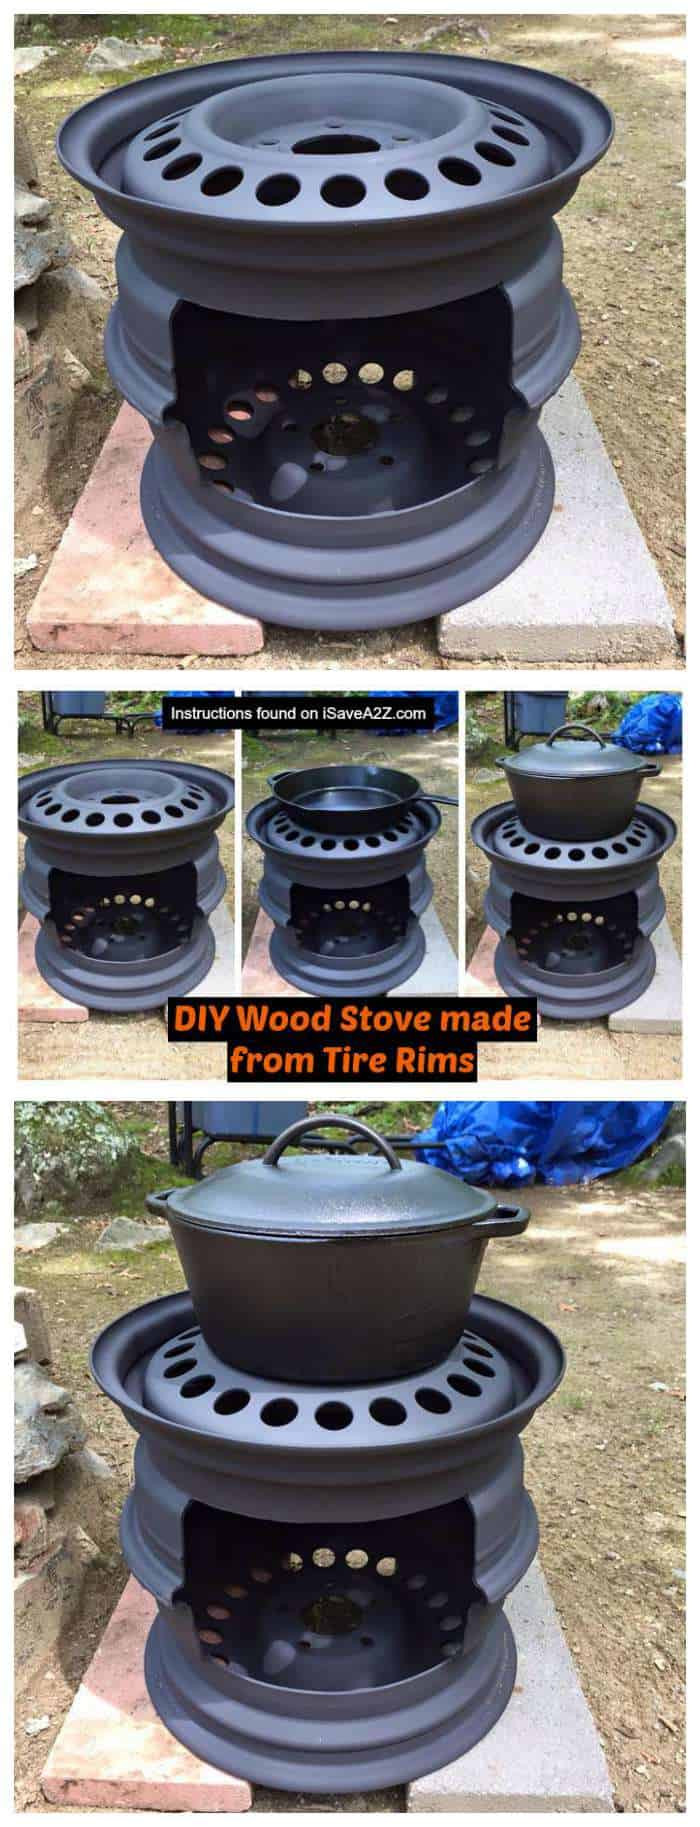 DIY Small Wood Stove
 DIY Wood Stove made from Tire Rims iSaveA2Z